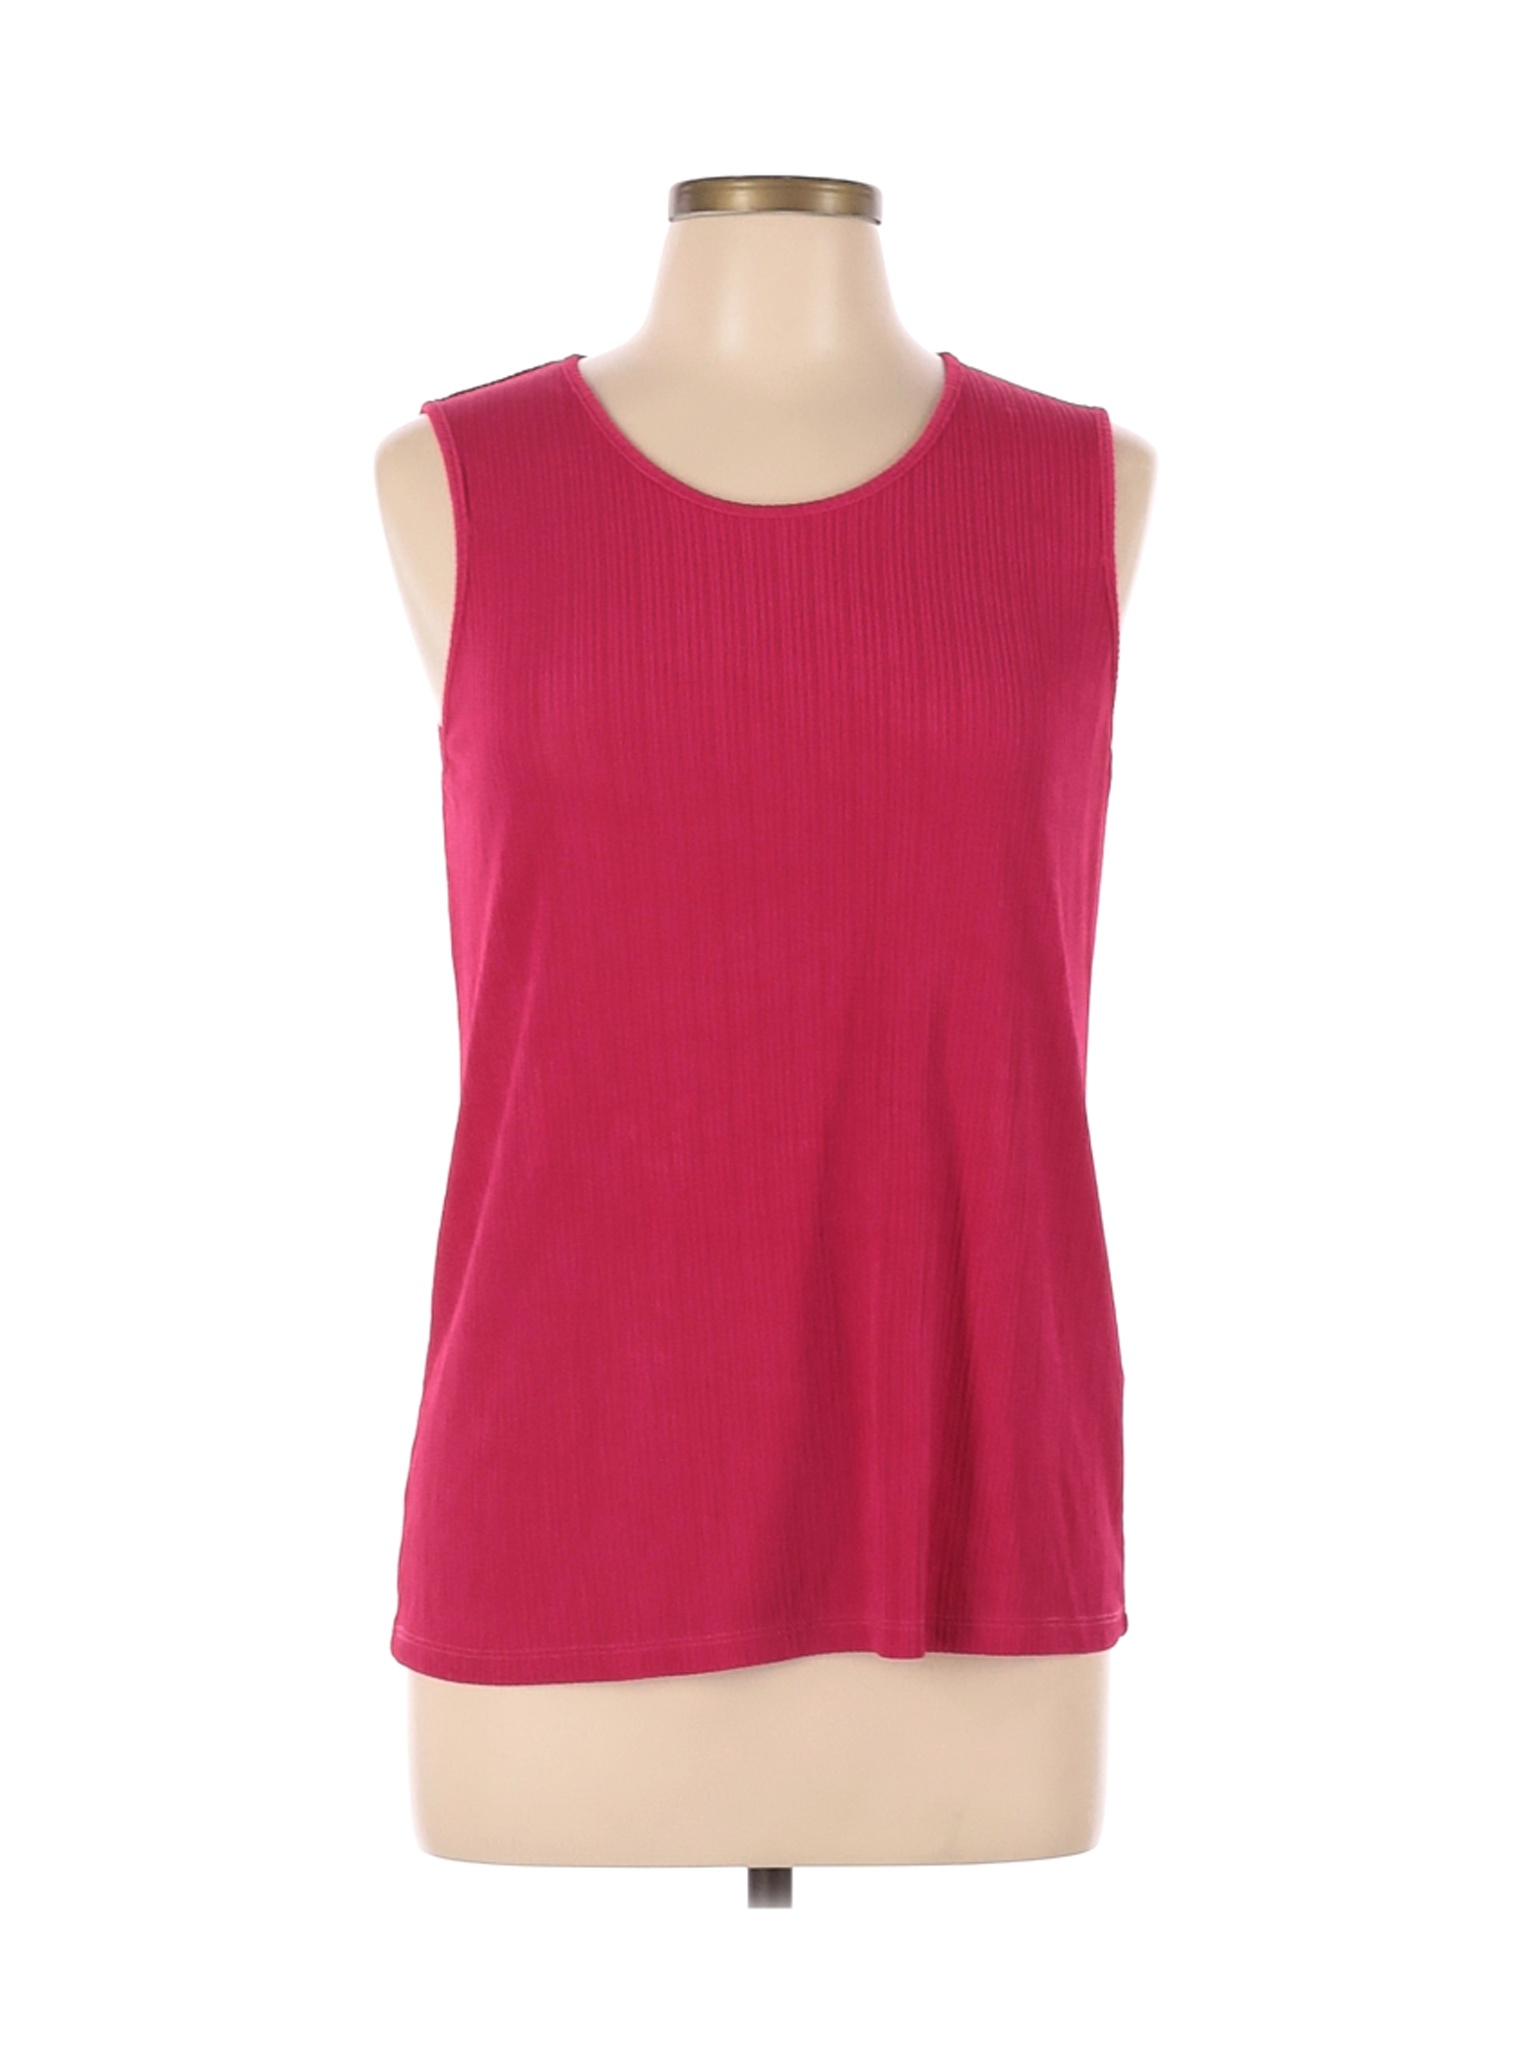 TanJay Women Pink Sleeveless Top M | eBay